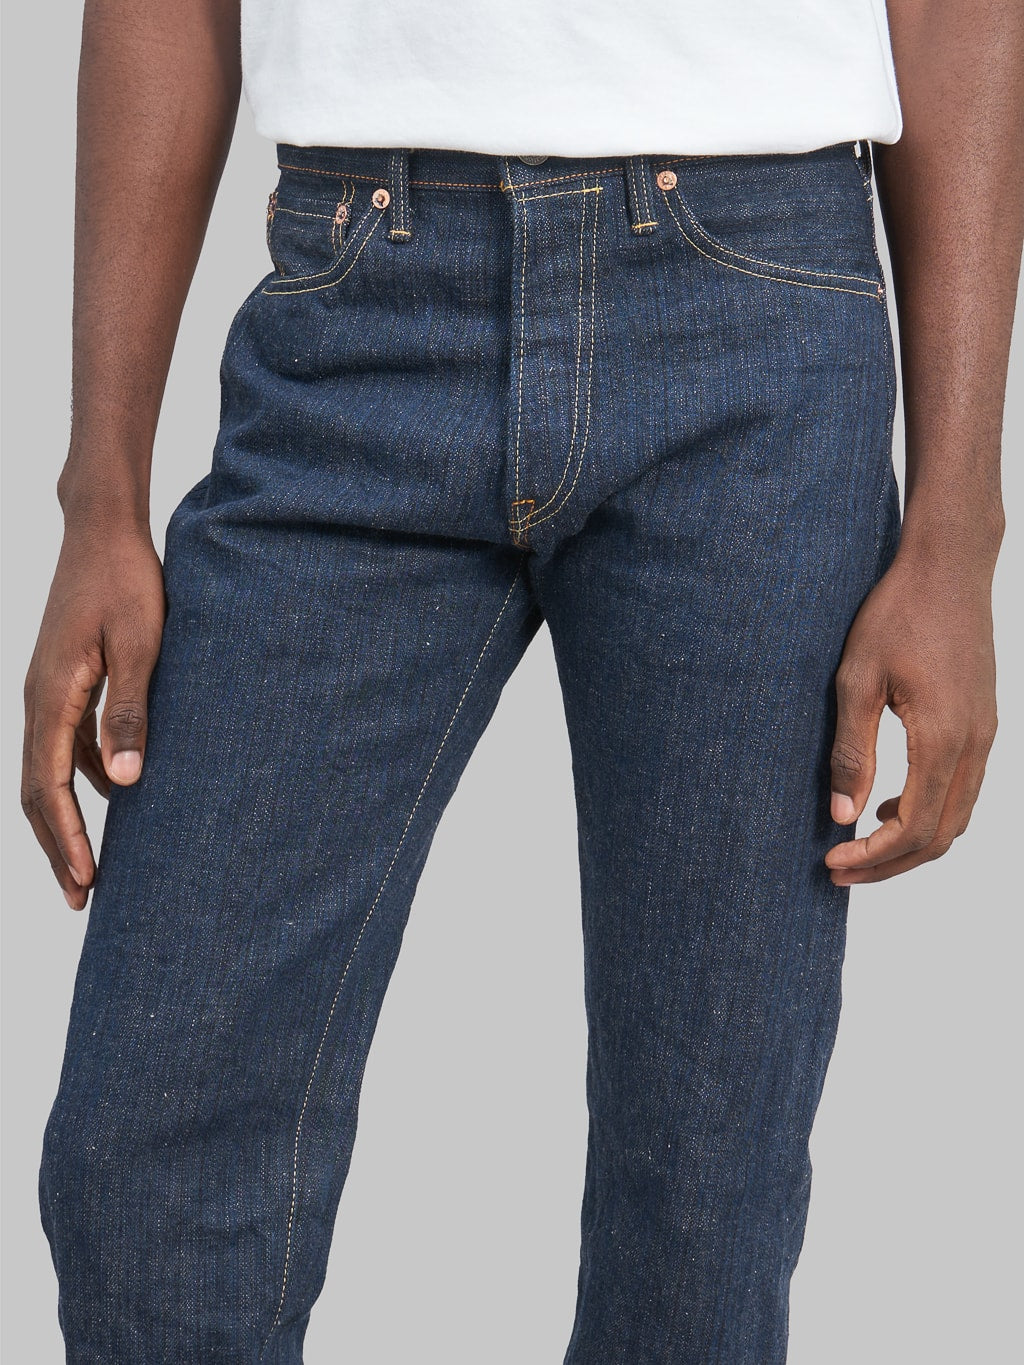 Oni denim kiwami indigo regular selvedge jeans front rise